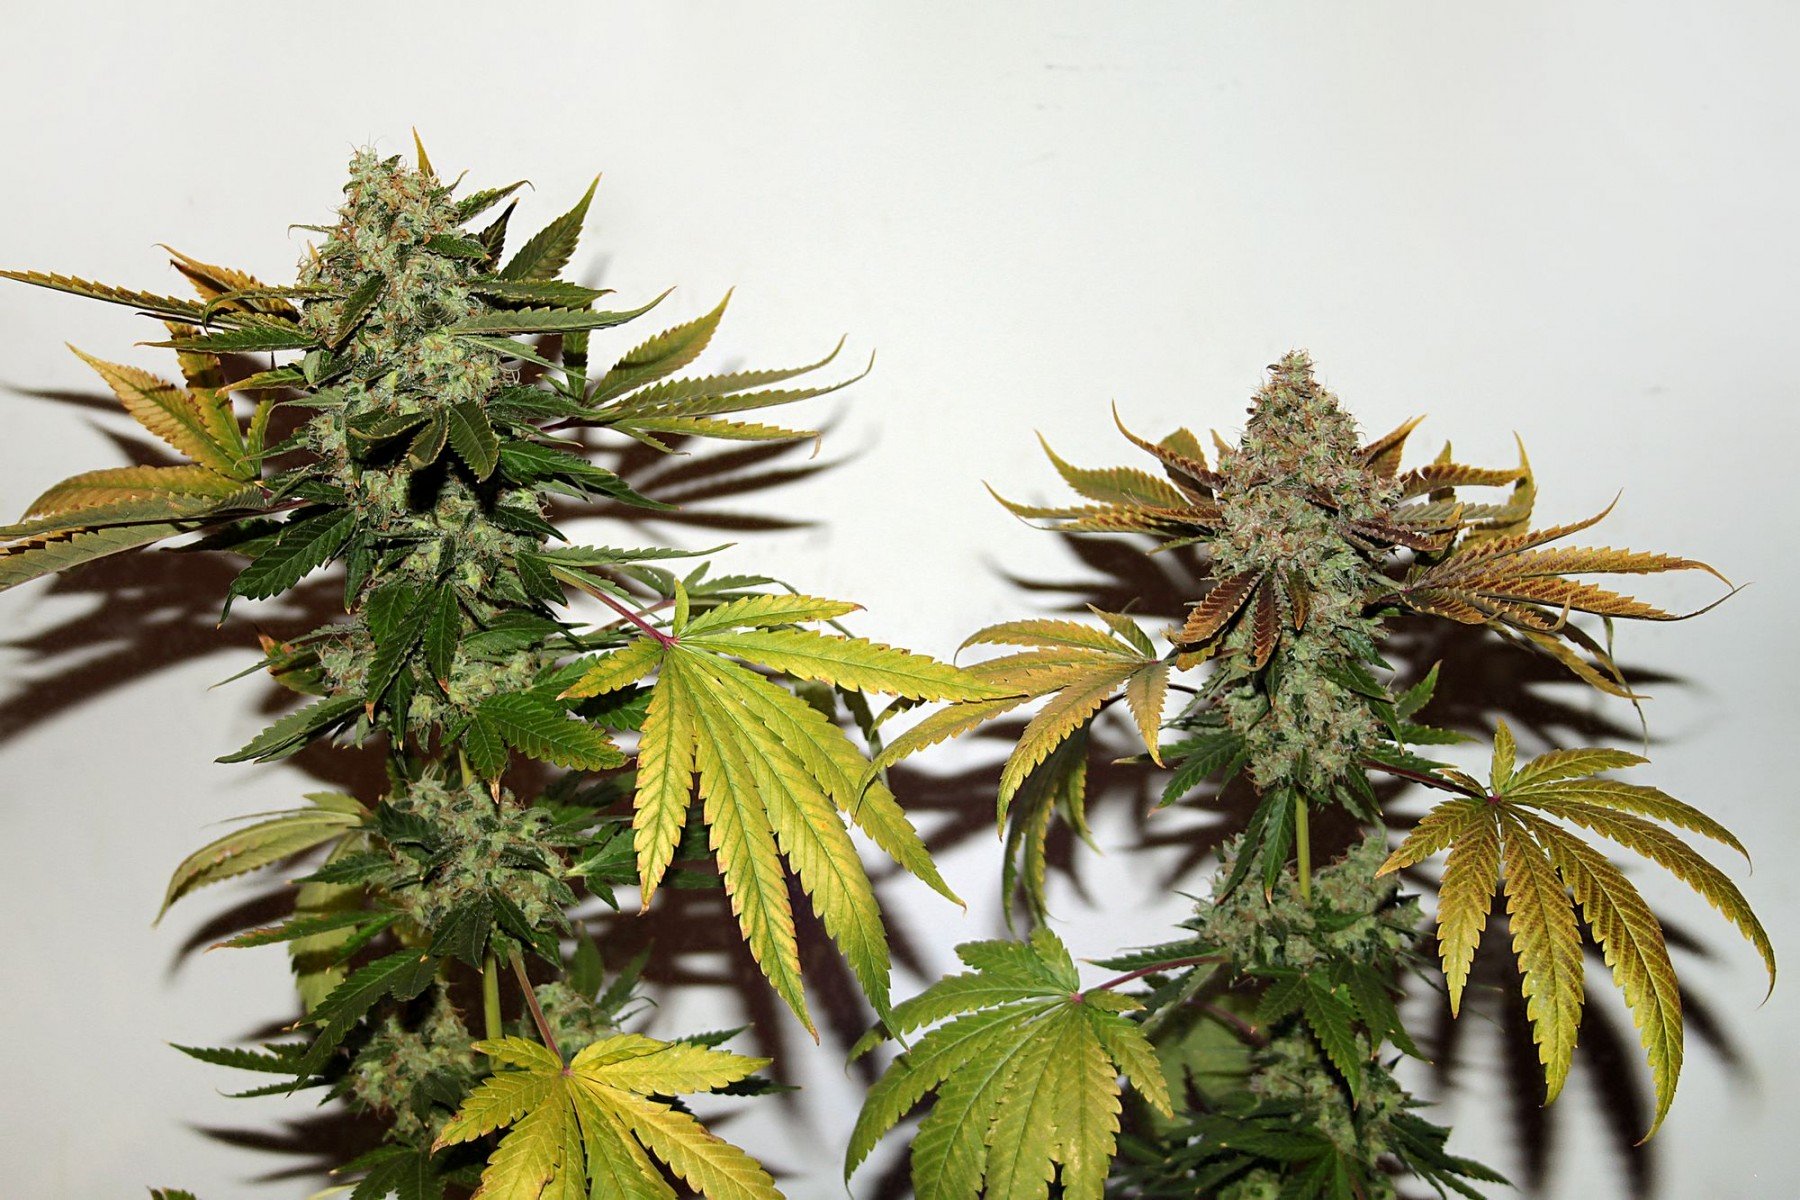 Skunk #1 in Flower marijuana strain review